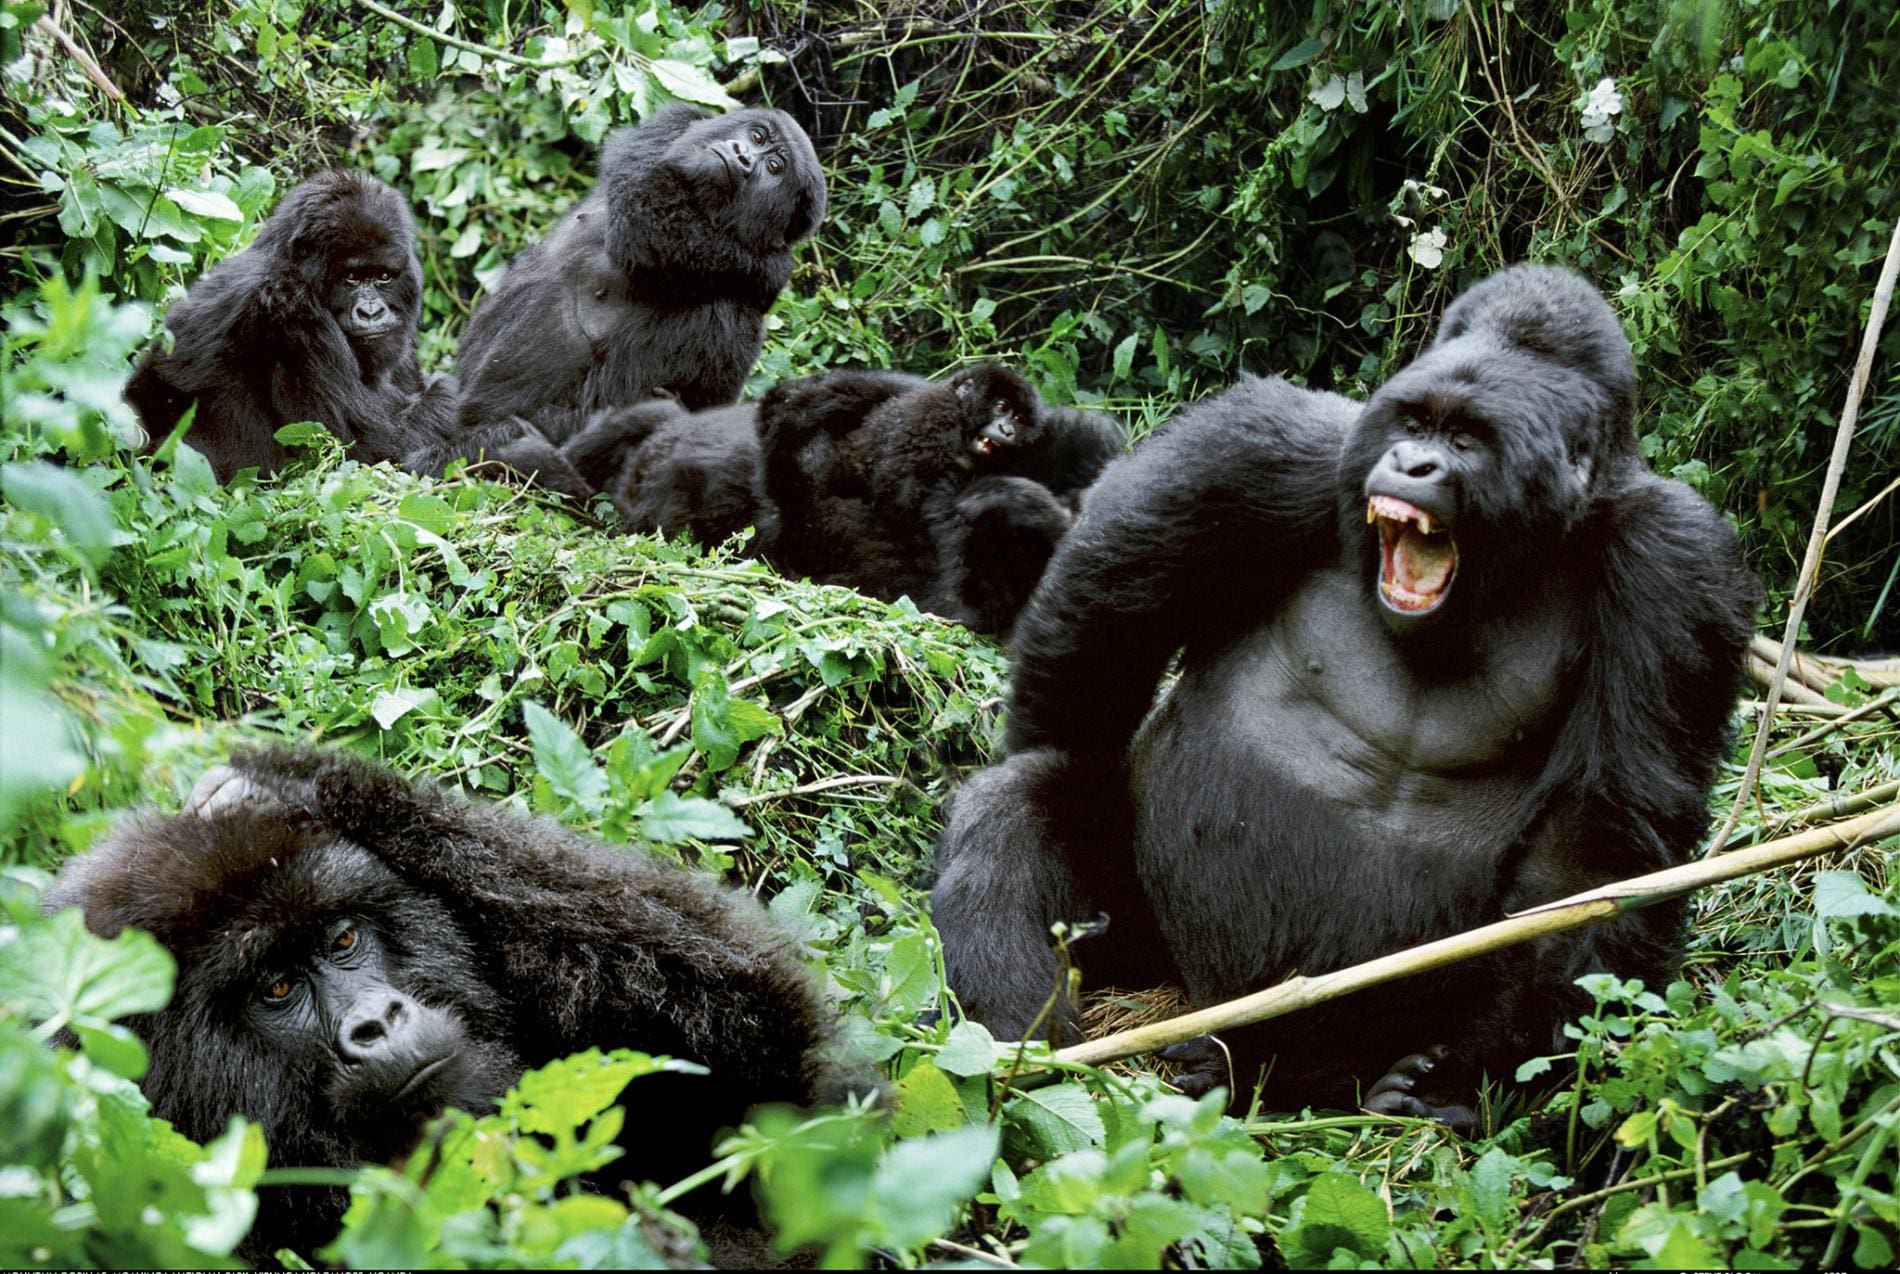 do gorillas travel in herds